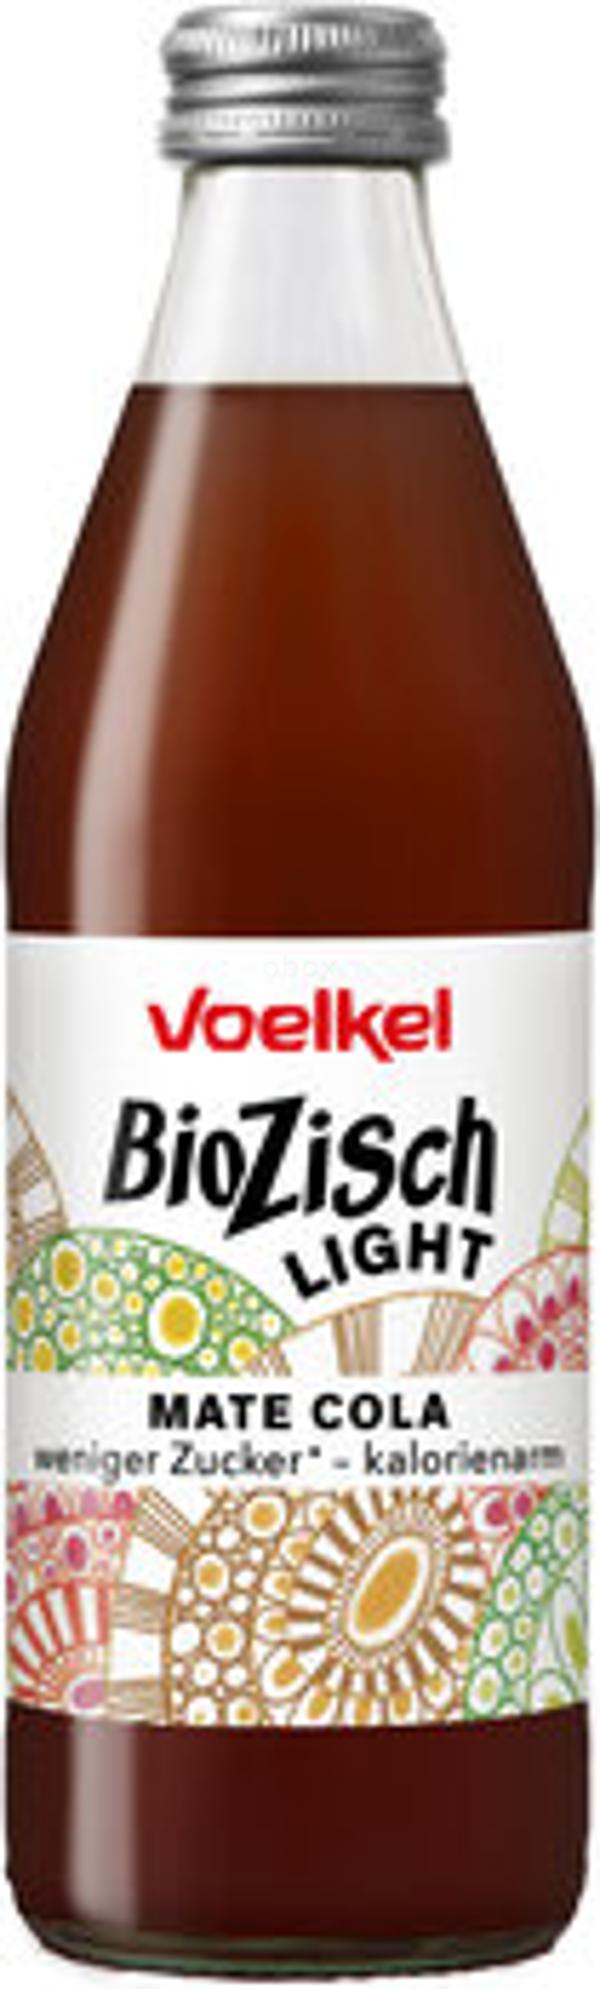 Produktfoto zu BioZisch Light Mate Cola, 10x0,33 l